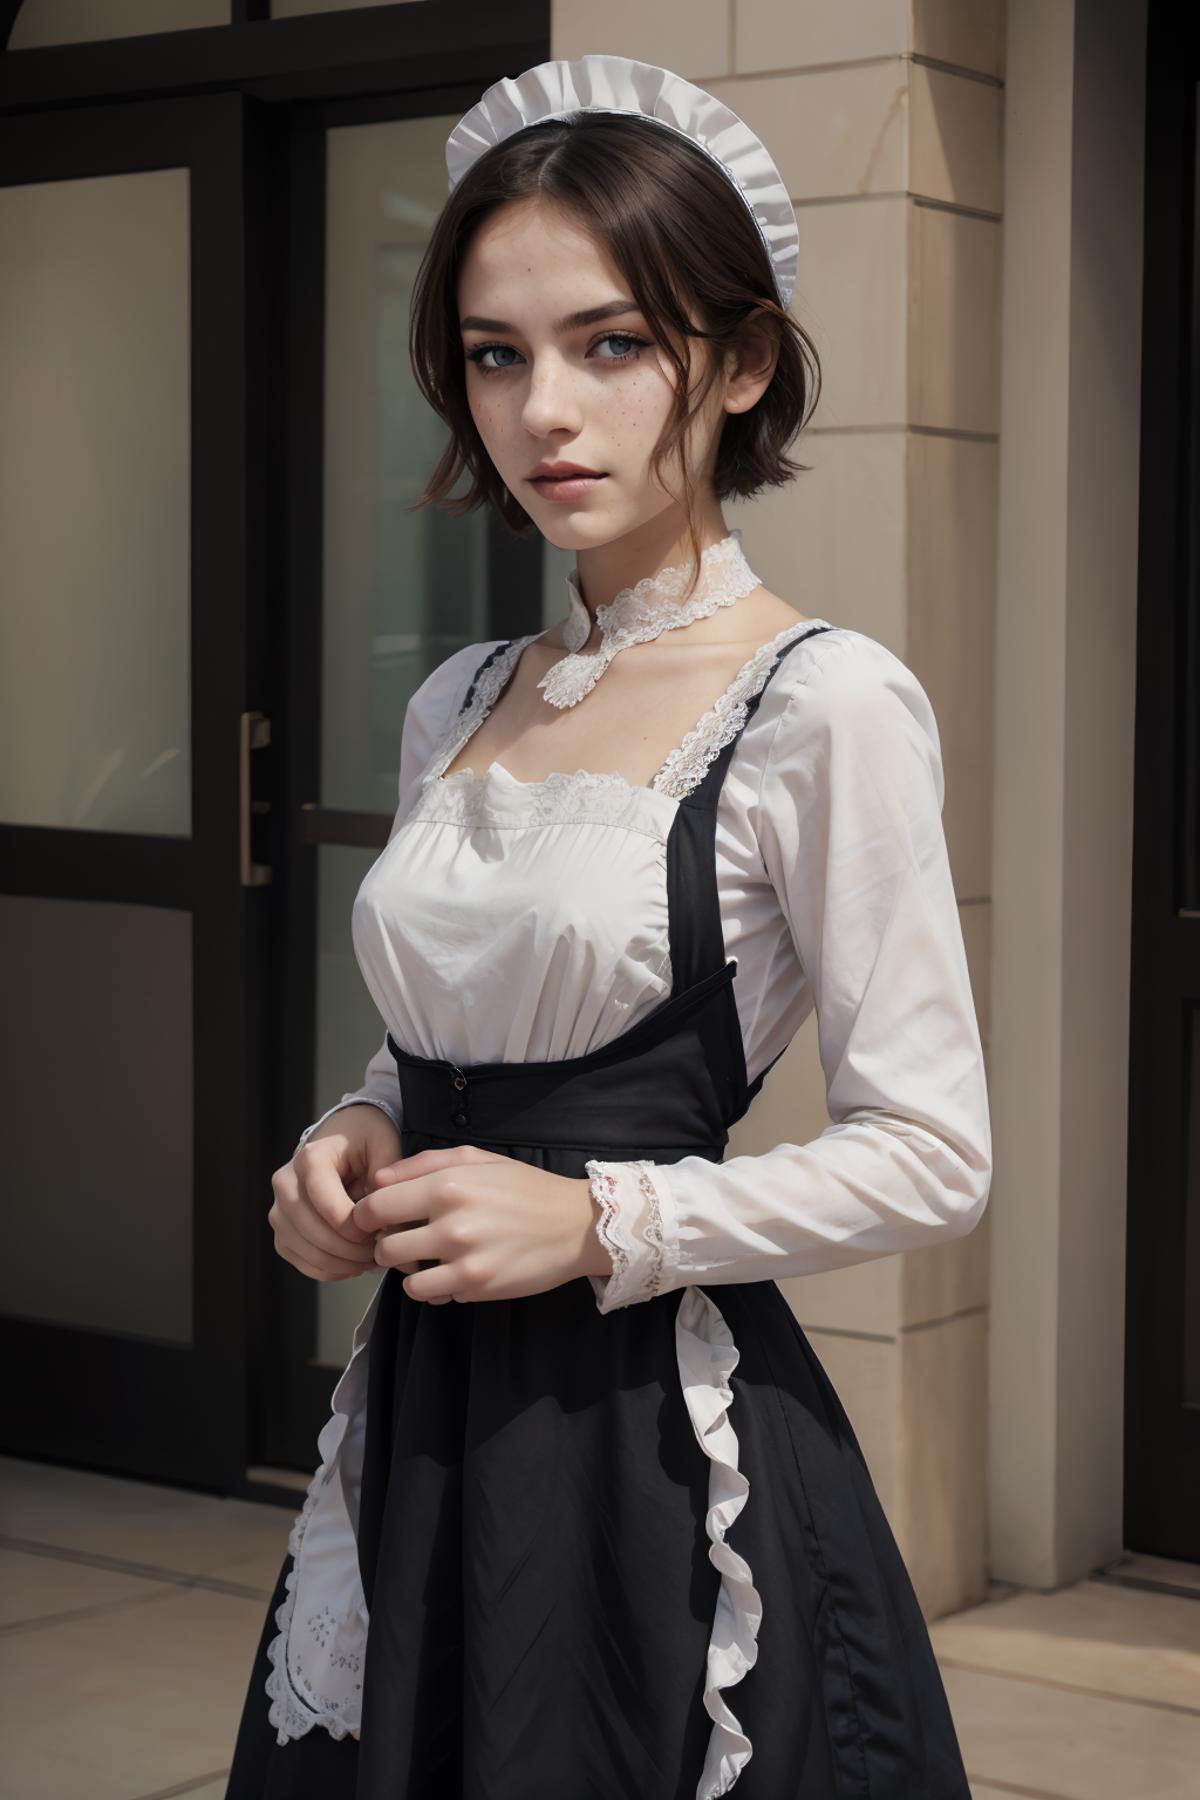 Victorian Maid Dress image by Rockzilla